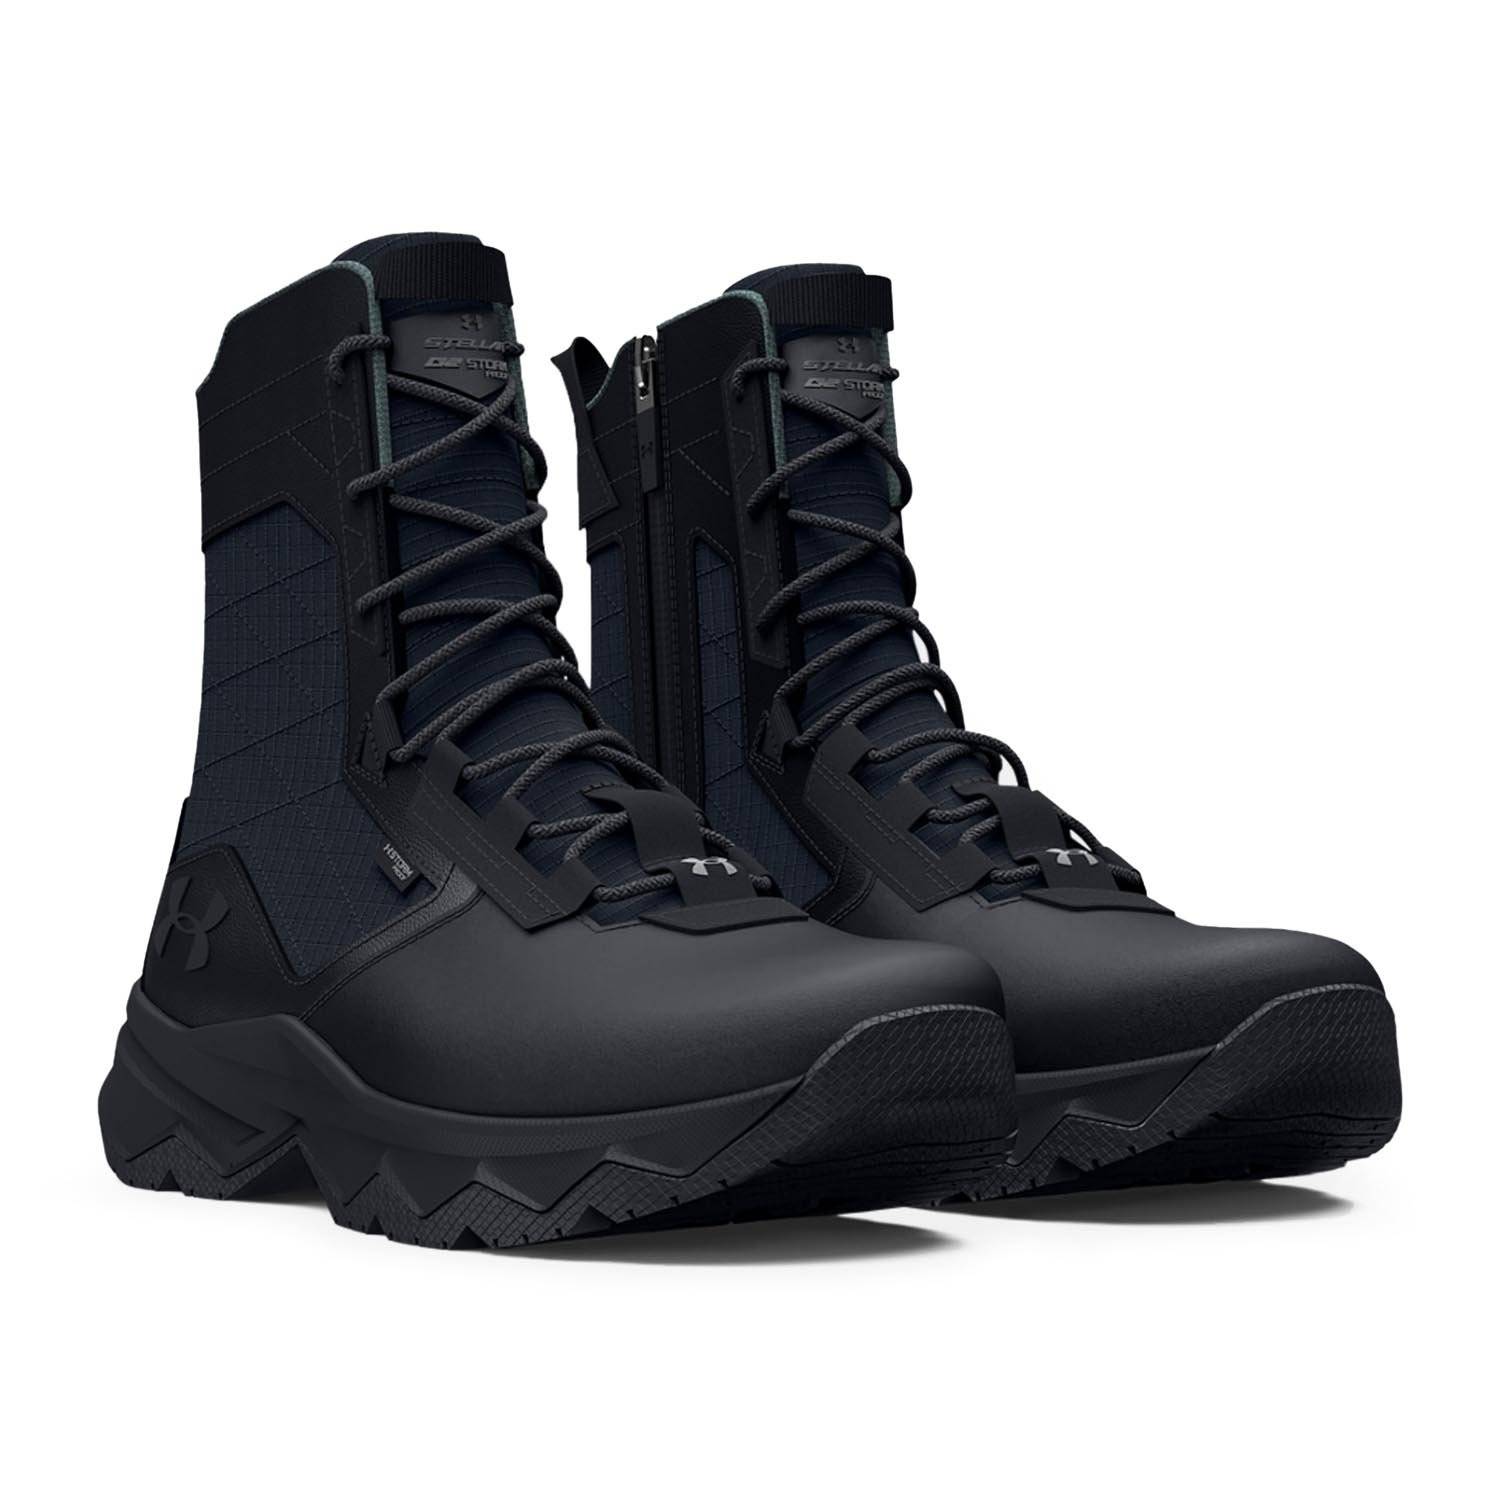 Under Armour Men's Stellar G2 Waterproof Zip Tactical Boots